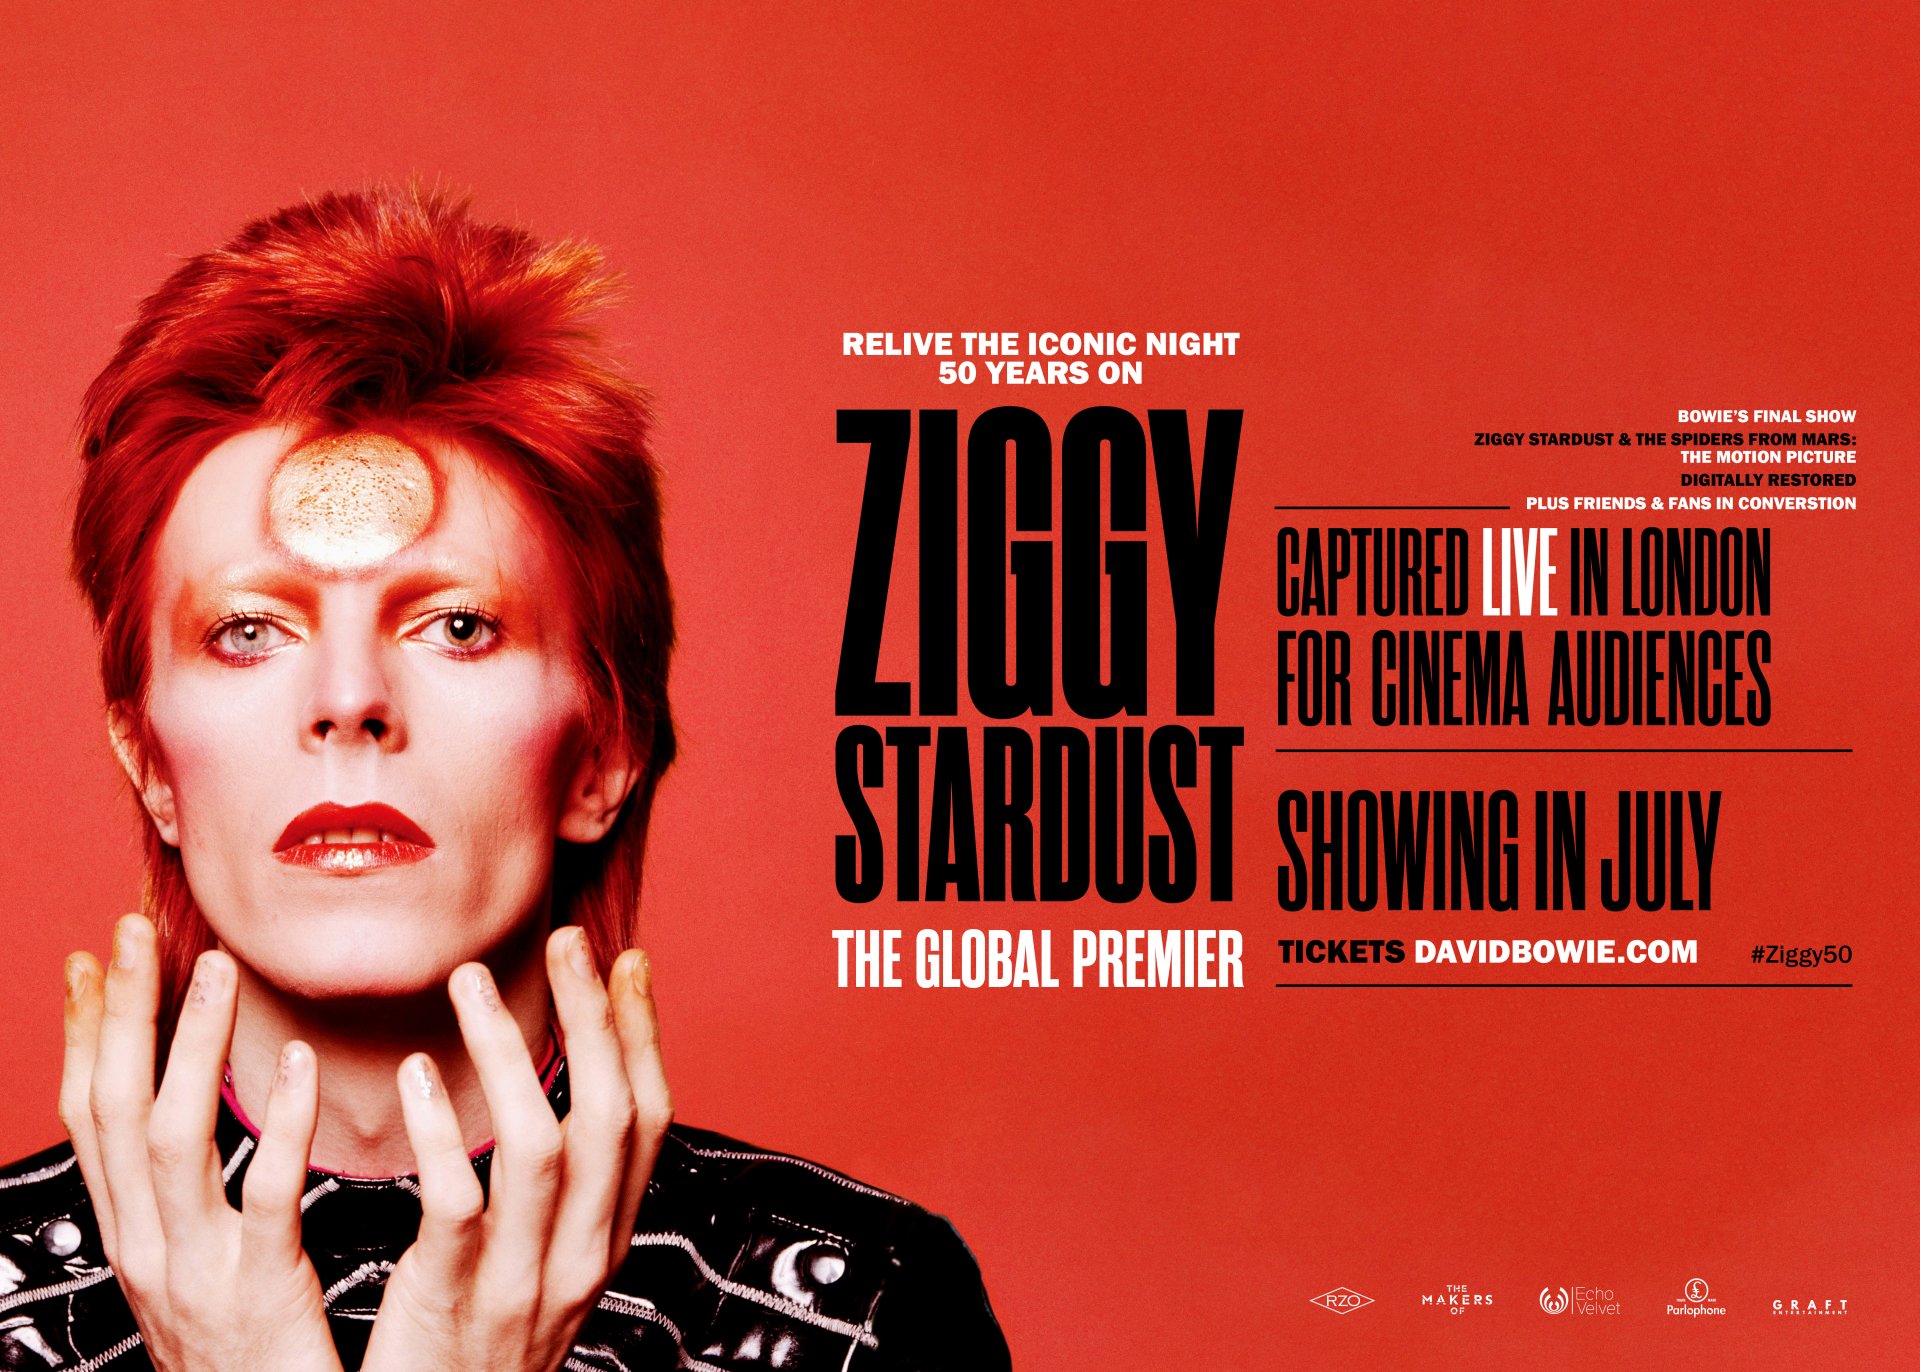 David Bowie Ziggy Stardust The Global Premiere 0899